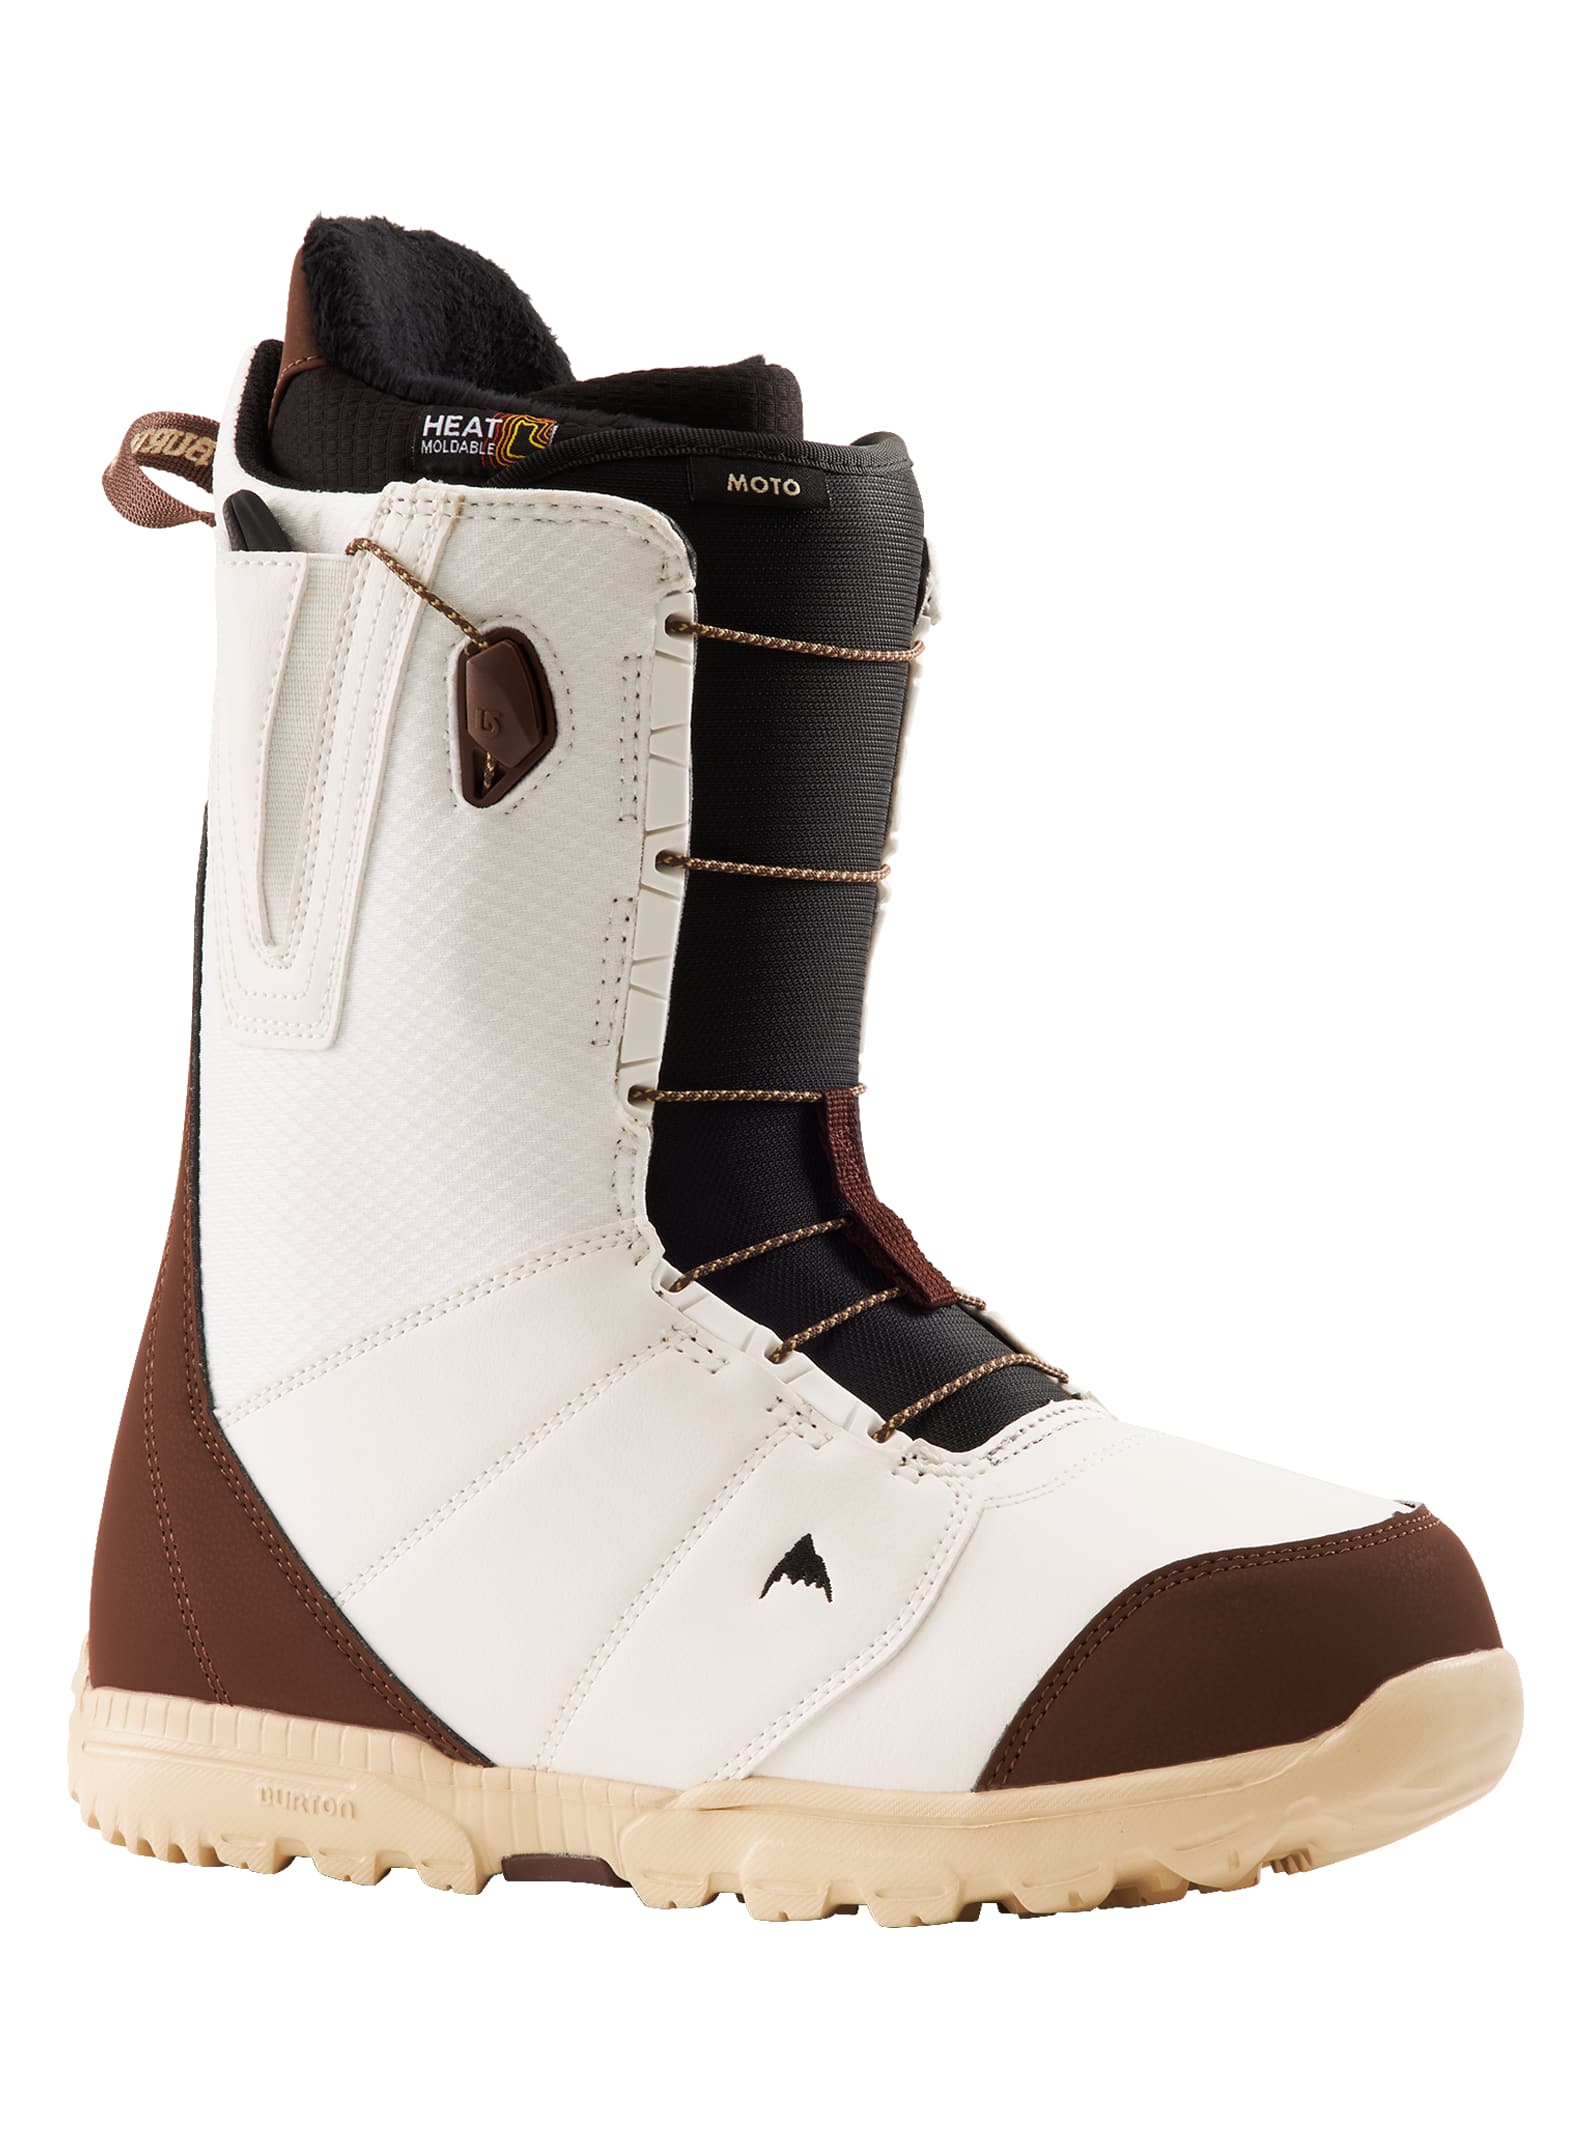 Burton Moto Men's Snowboard Shoes Snowboard Boots Snowboardboots 2019-2021 New 